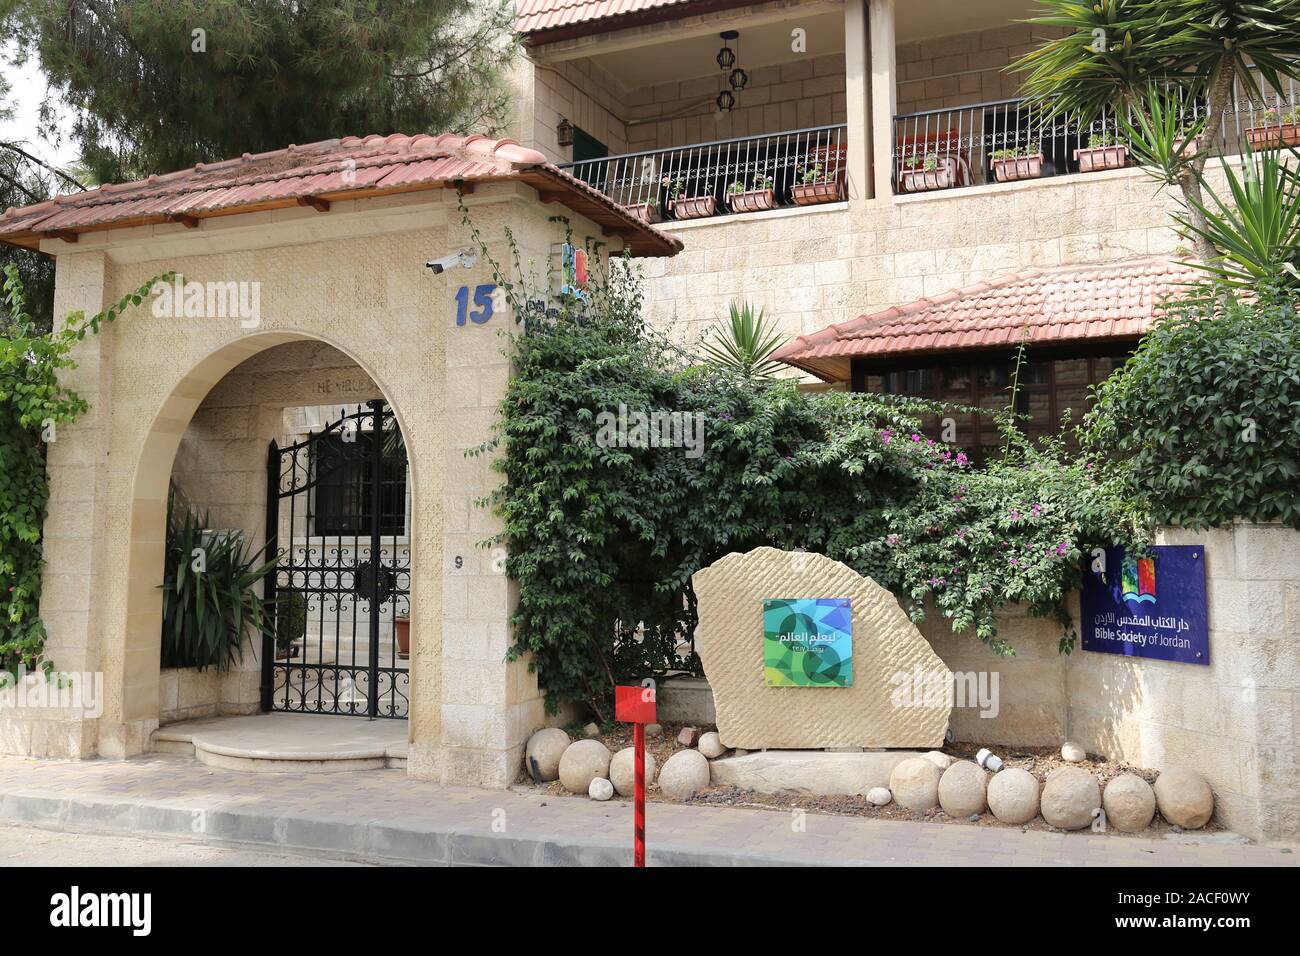 Bible Society of Jordan, Ali Mahmoud Taha Street, Rainbow Street area, Jabal Amman, Amman, Jordan, Middle East Stock Photo